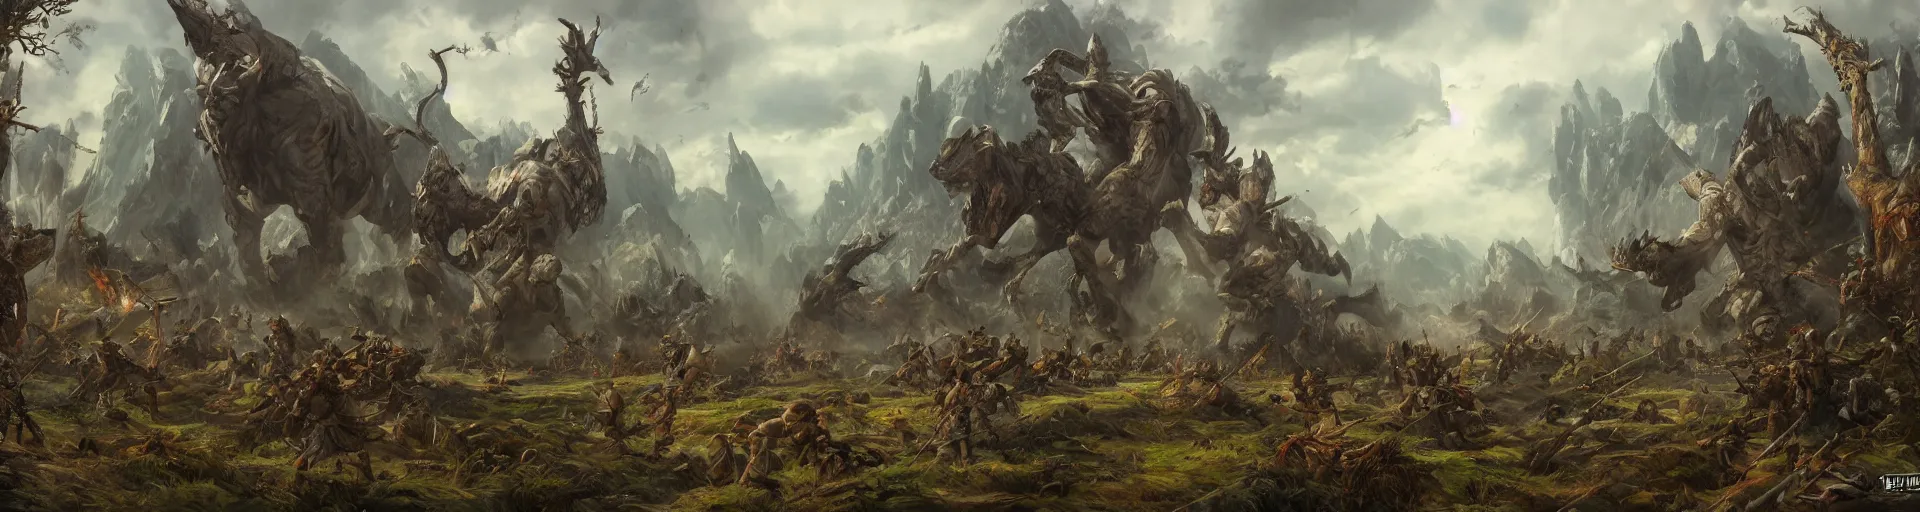 Image similar to fantasy environment giants fighting in war by eugene von guerard, ivan shishkin, concept art, trending on artstation